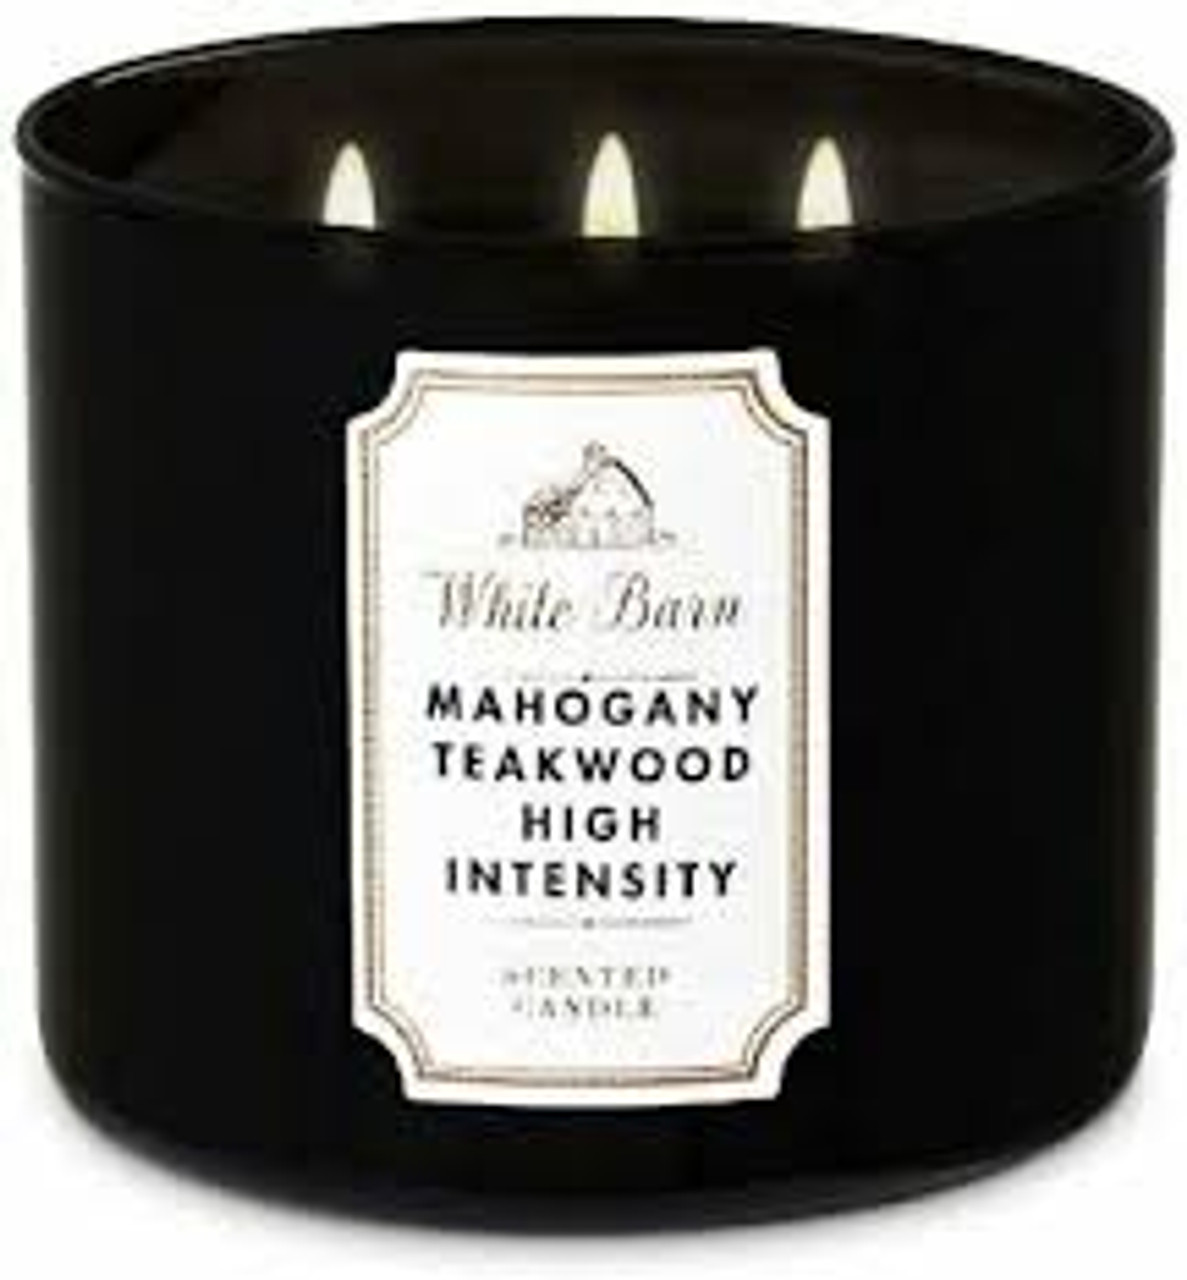 Bath & Body Works Mahogany Teakwood Single Wick Candle